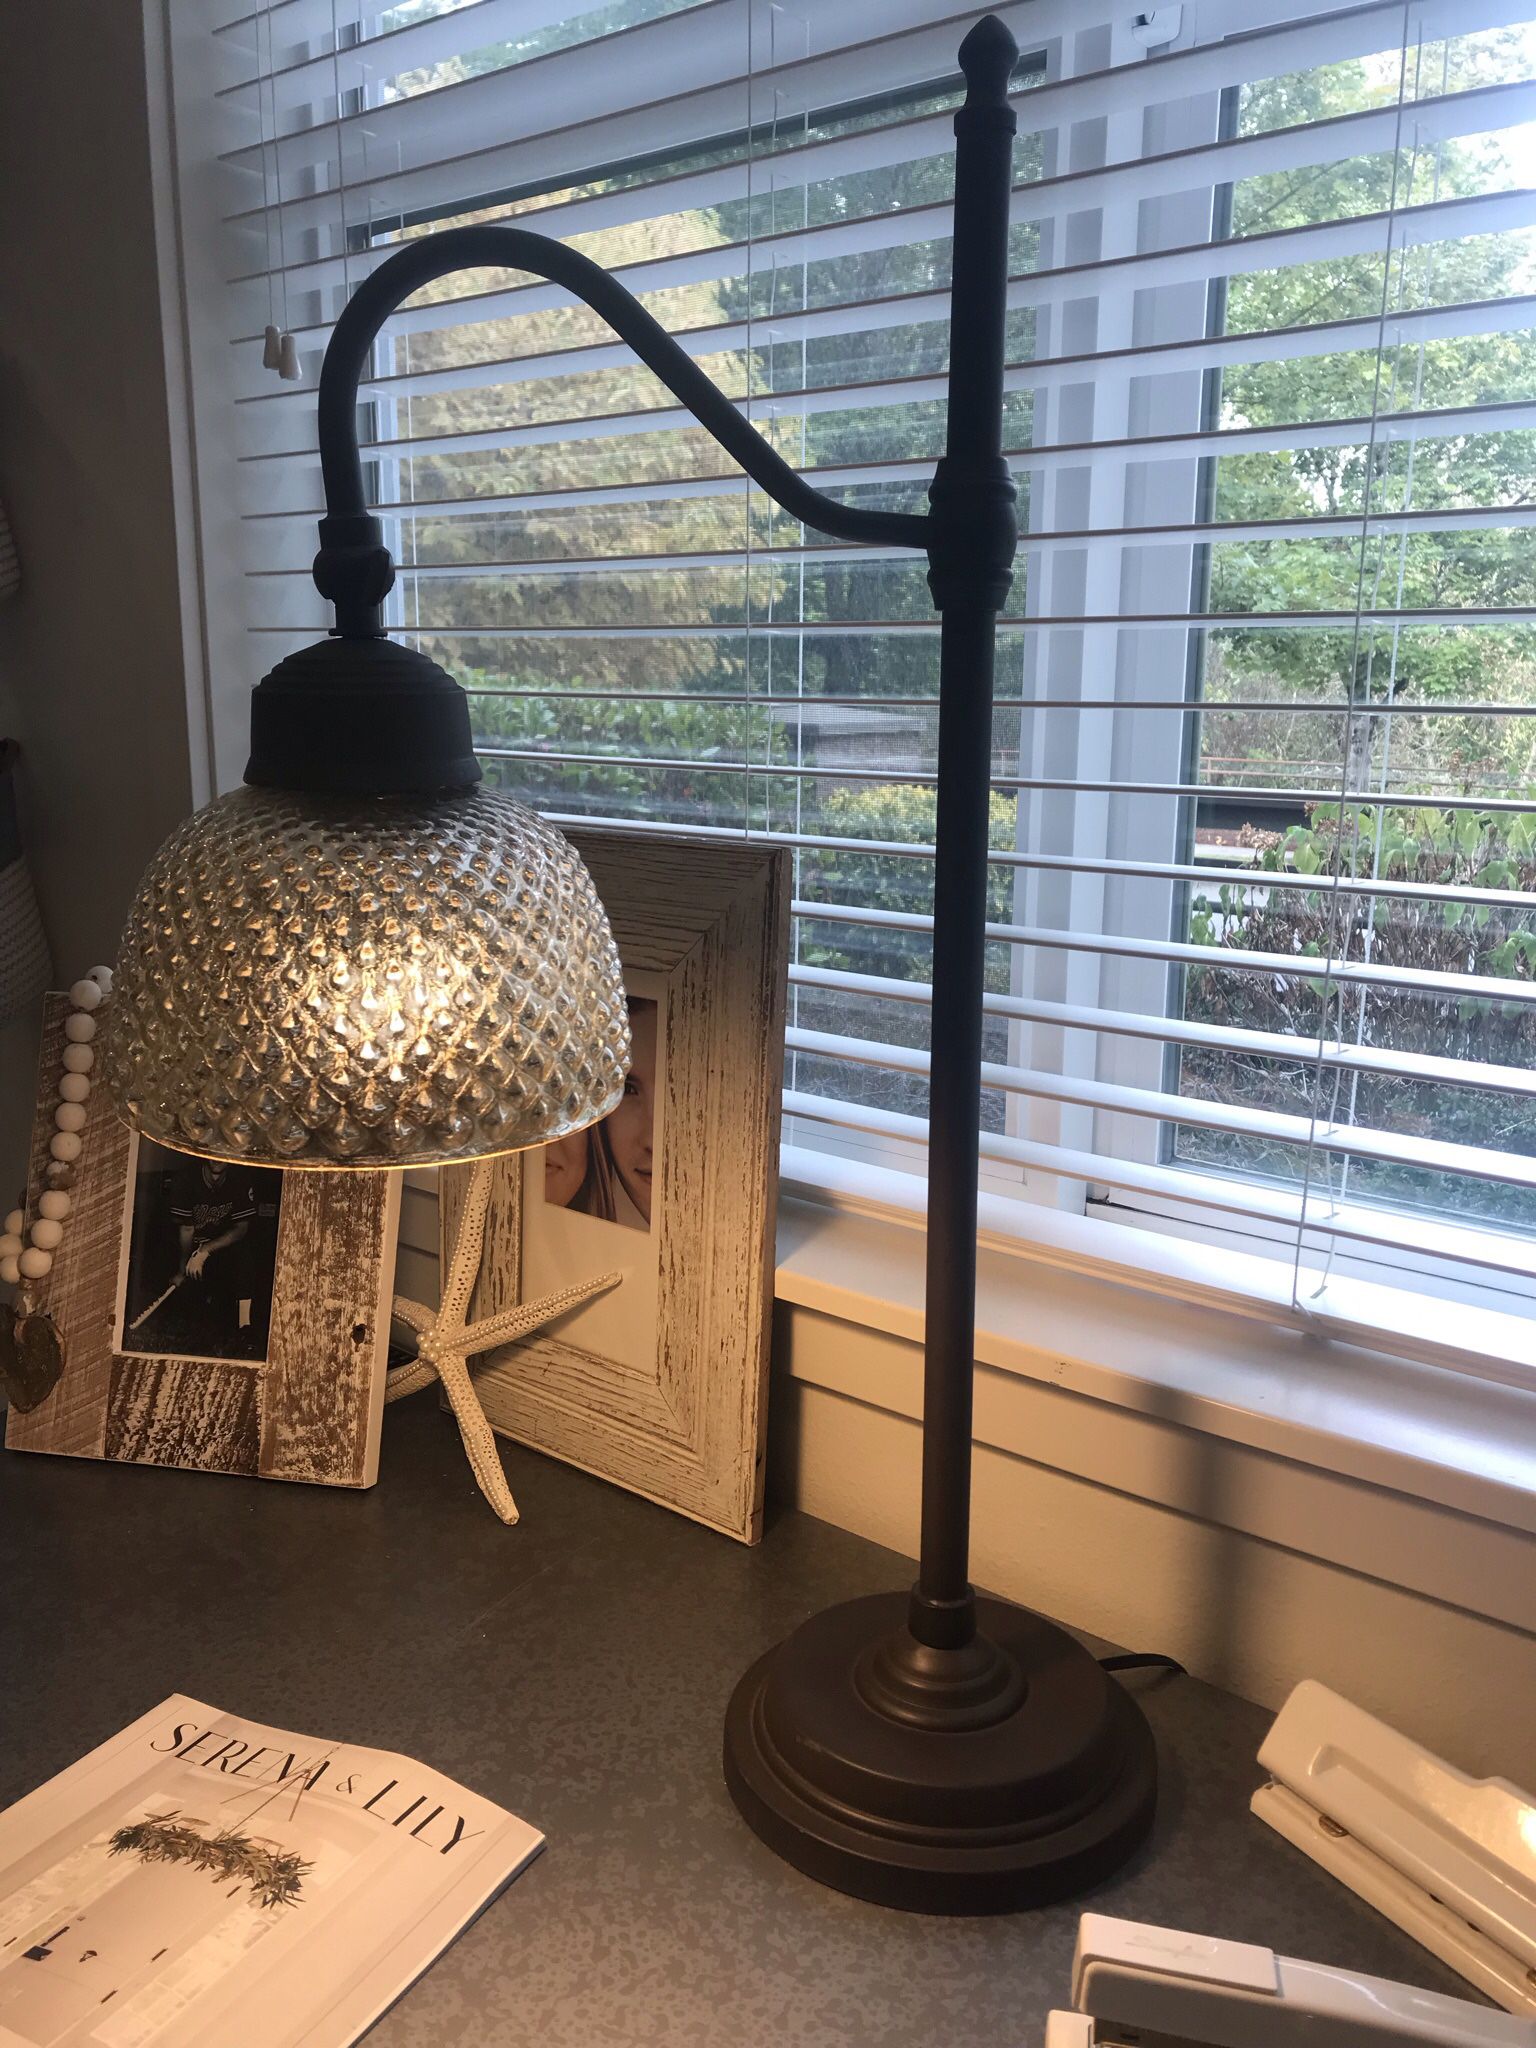 SALE!! “pottery barn” desk lamp!!